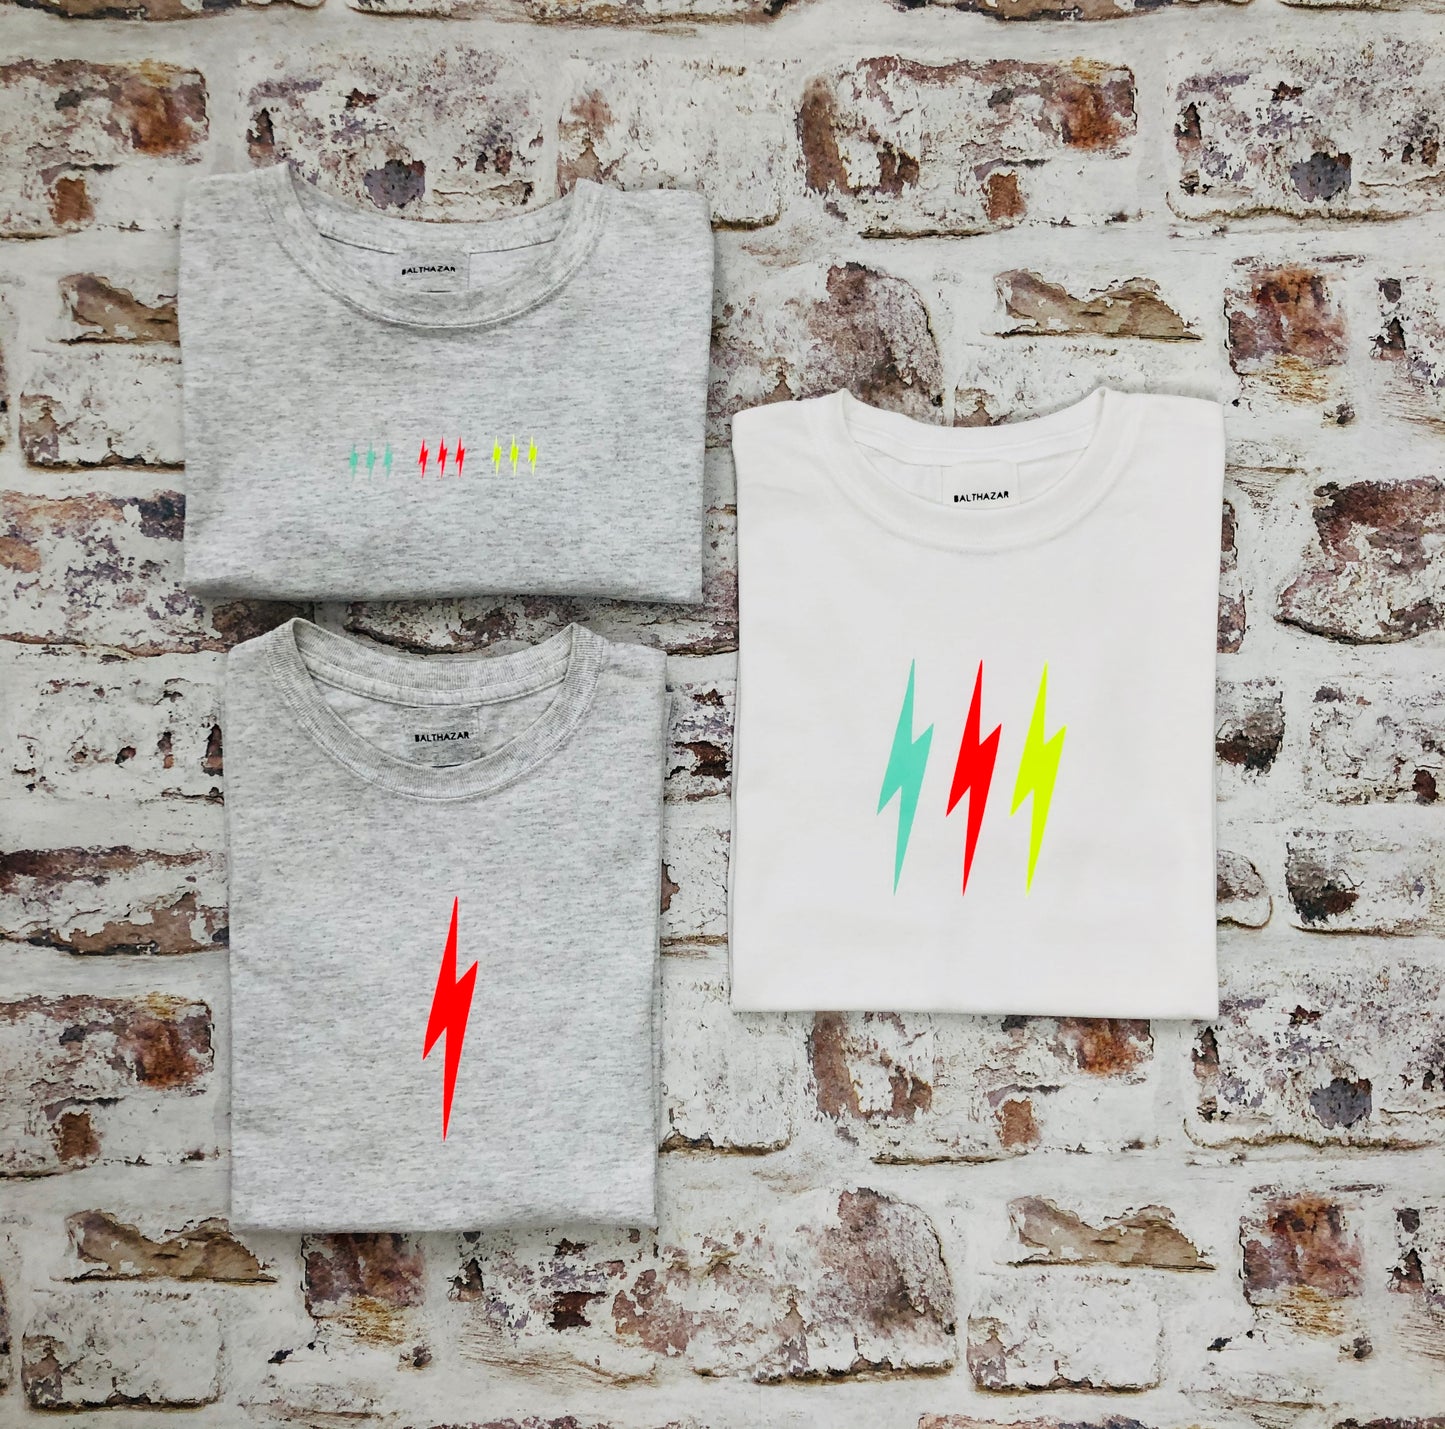 Neon Lightning bolt t-shirt - Trio